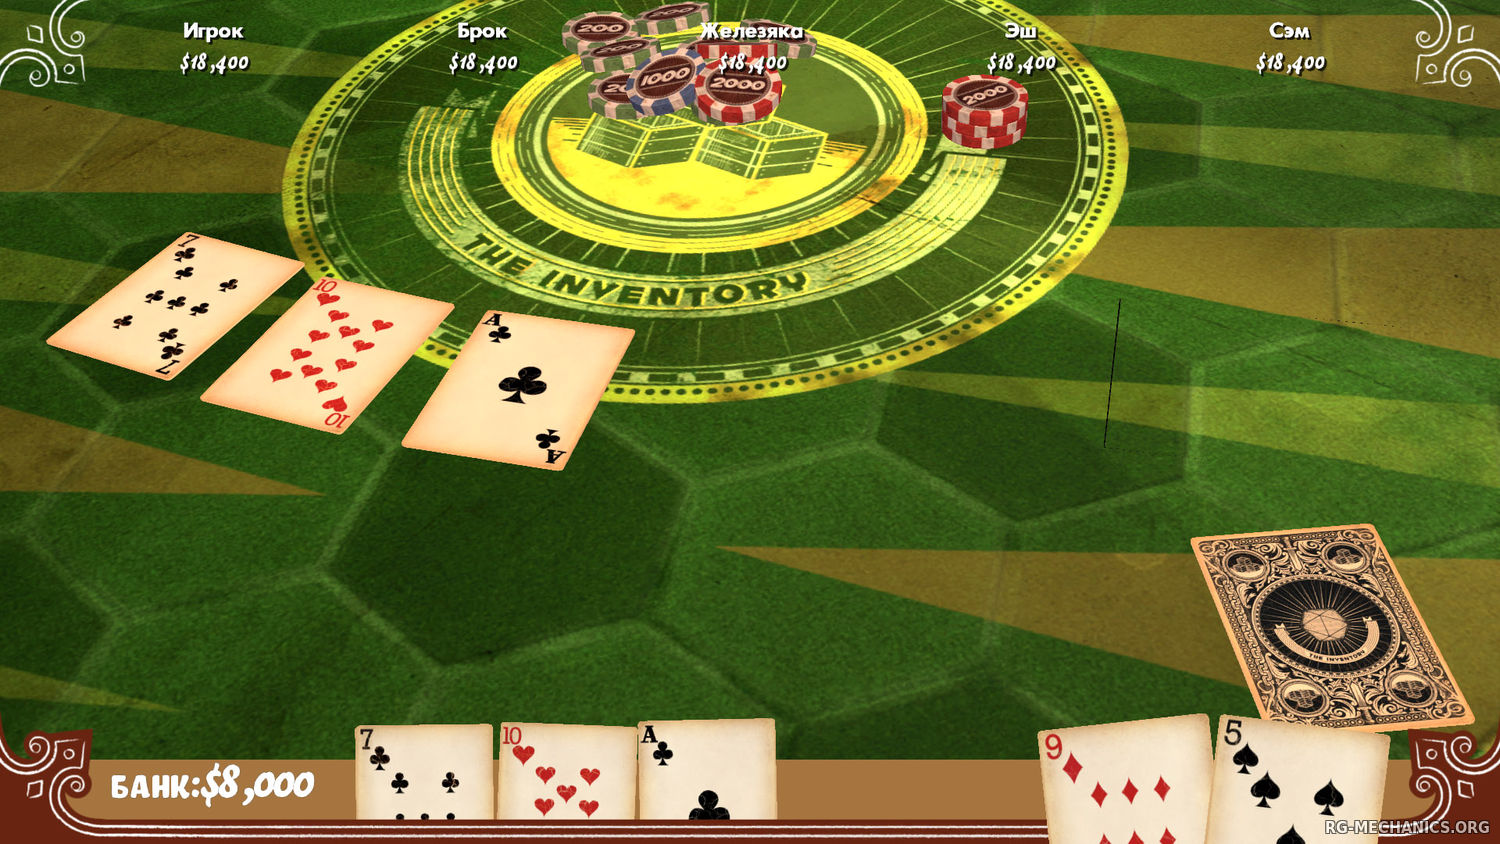 Скриншот к игре Poker Night 2 (2013) PC | RePack от R.G. Механики